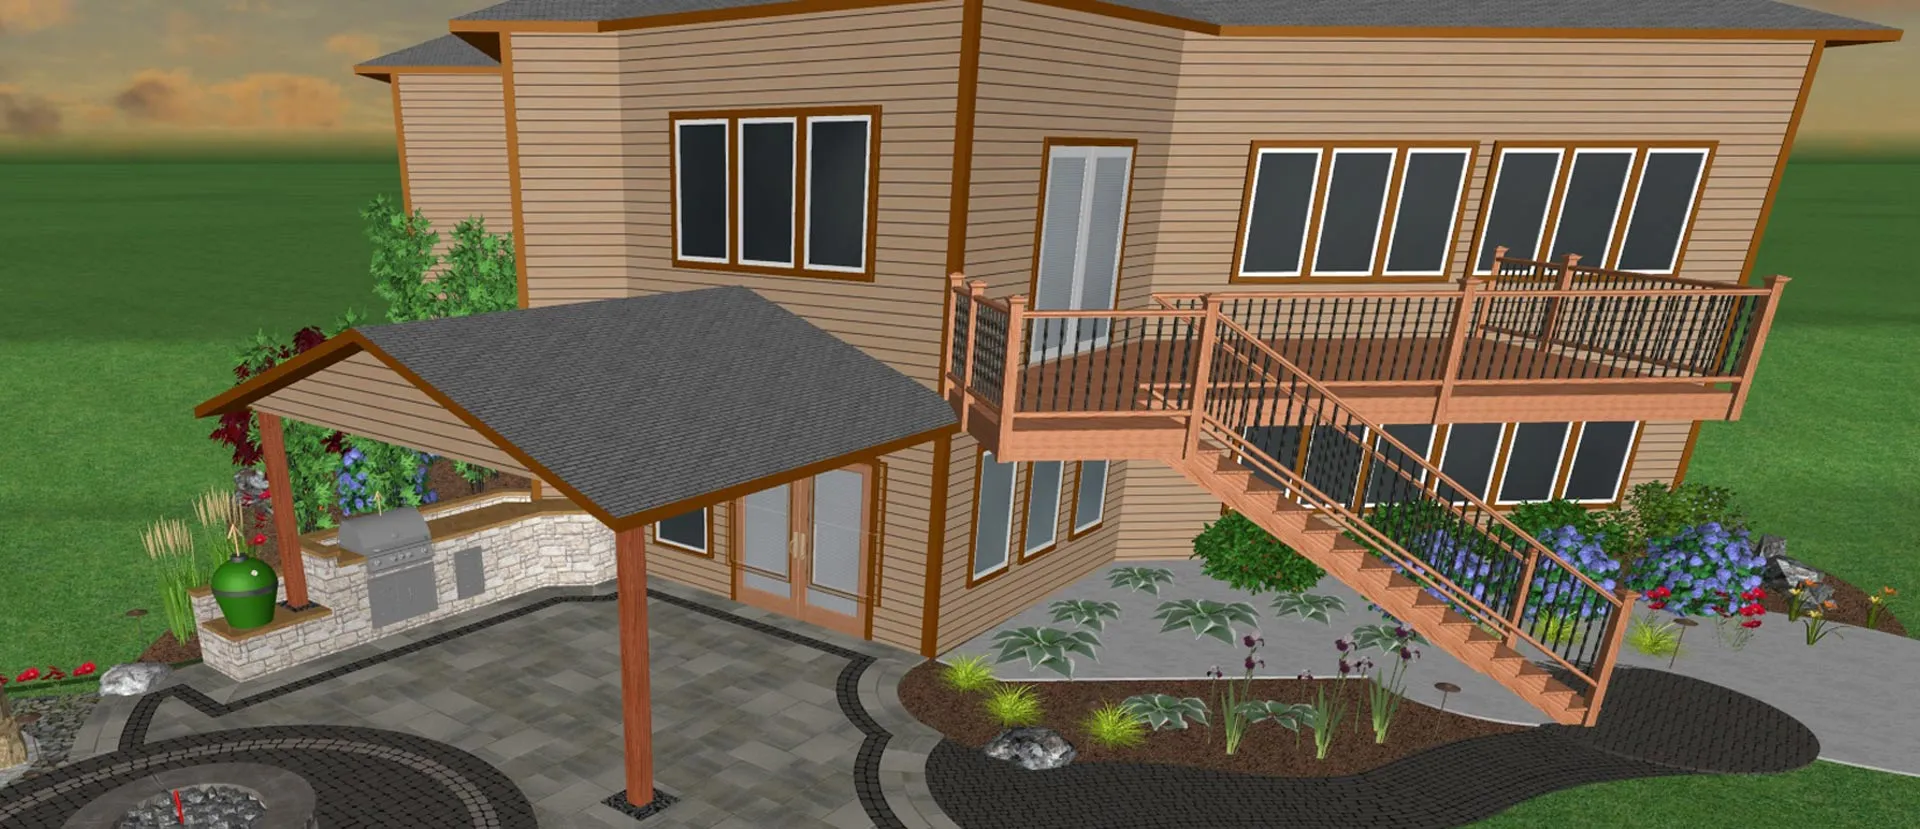 Design rendering for backyard transformation in Omaha, NE.